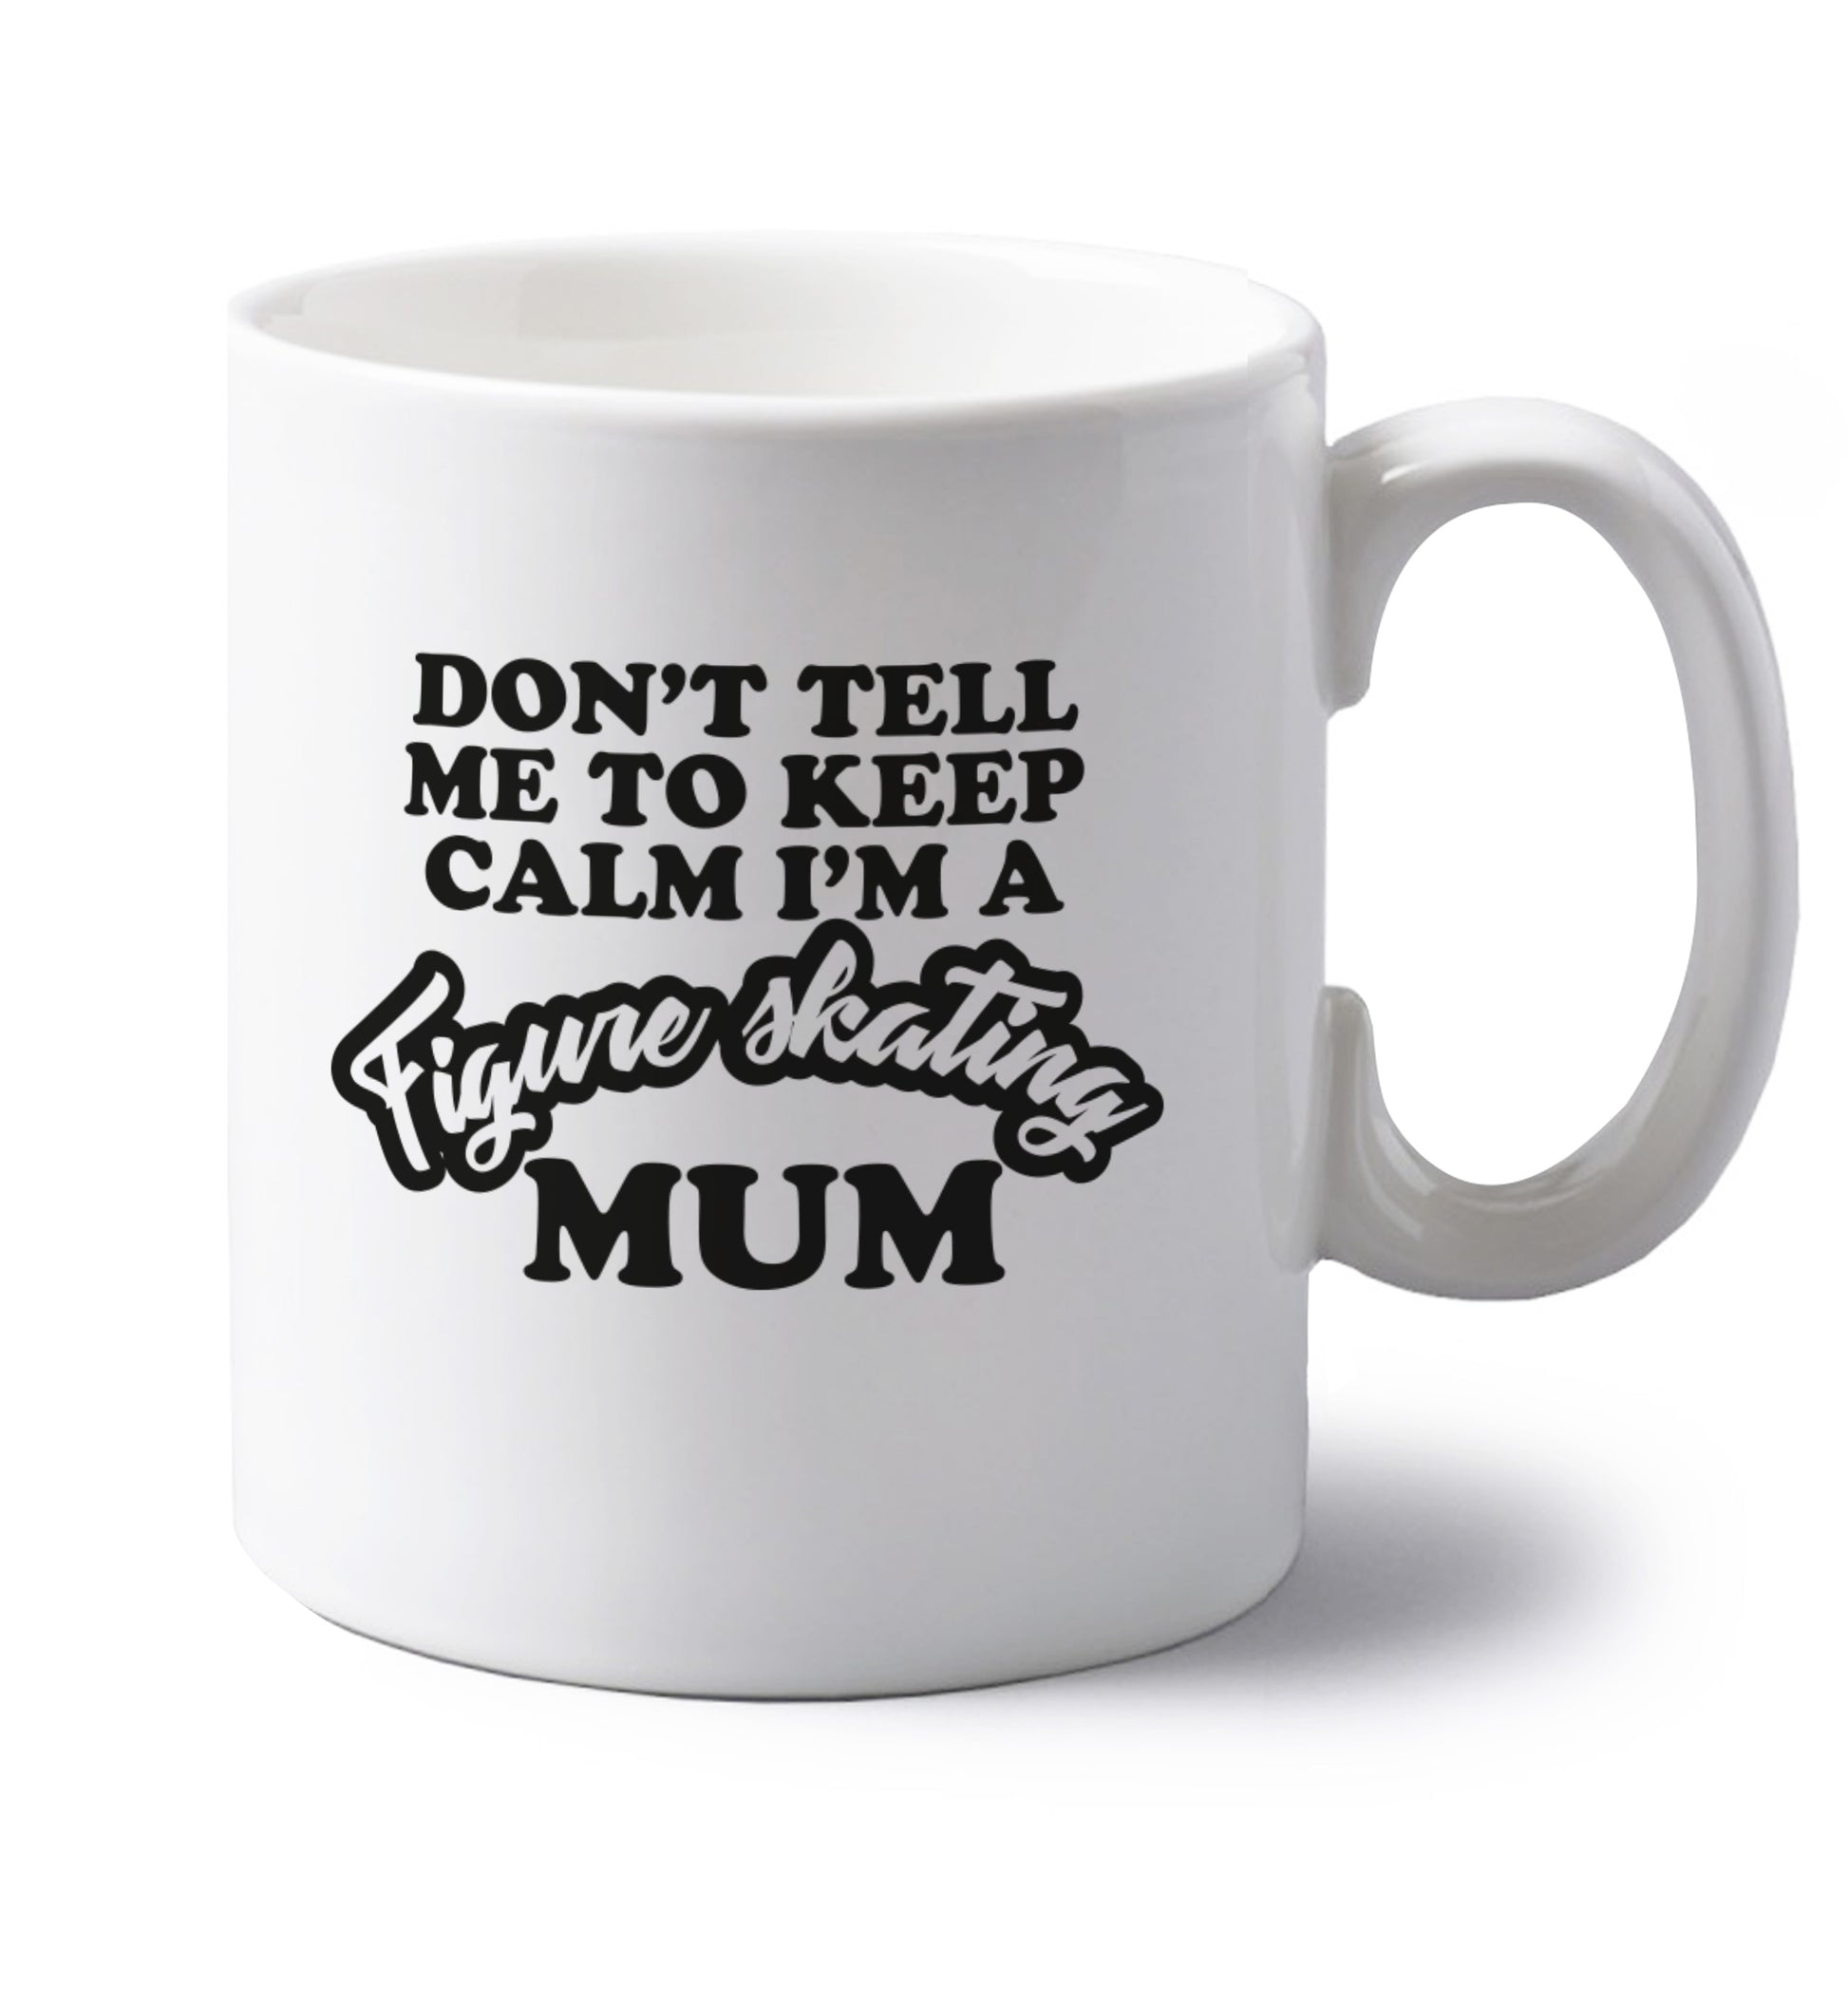 Don't tell me to keep calm I'm a figure skating mum left handed white ceramic mug 